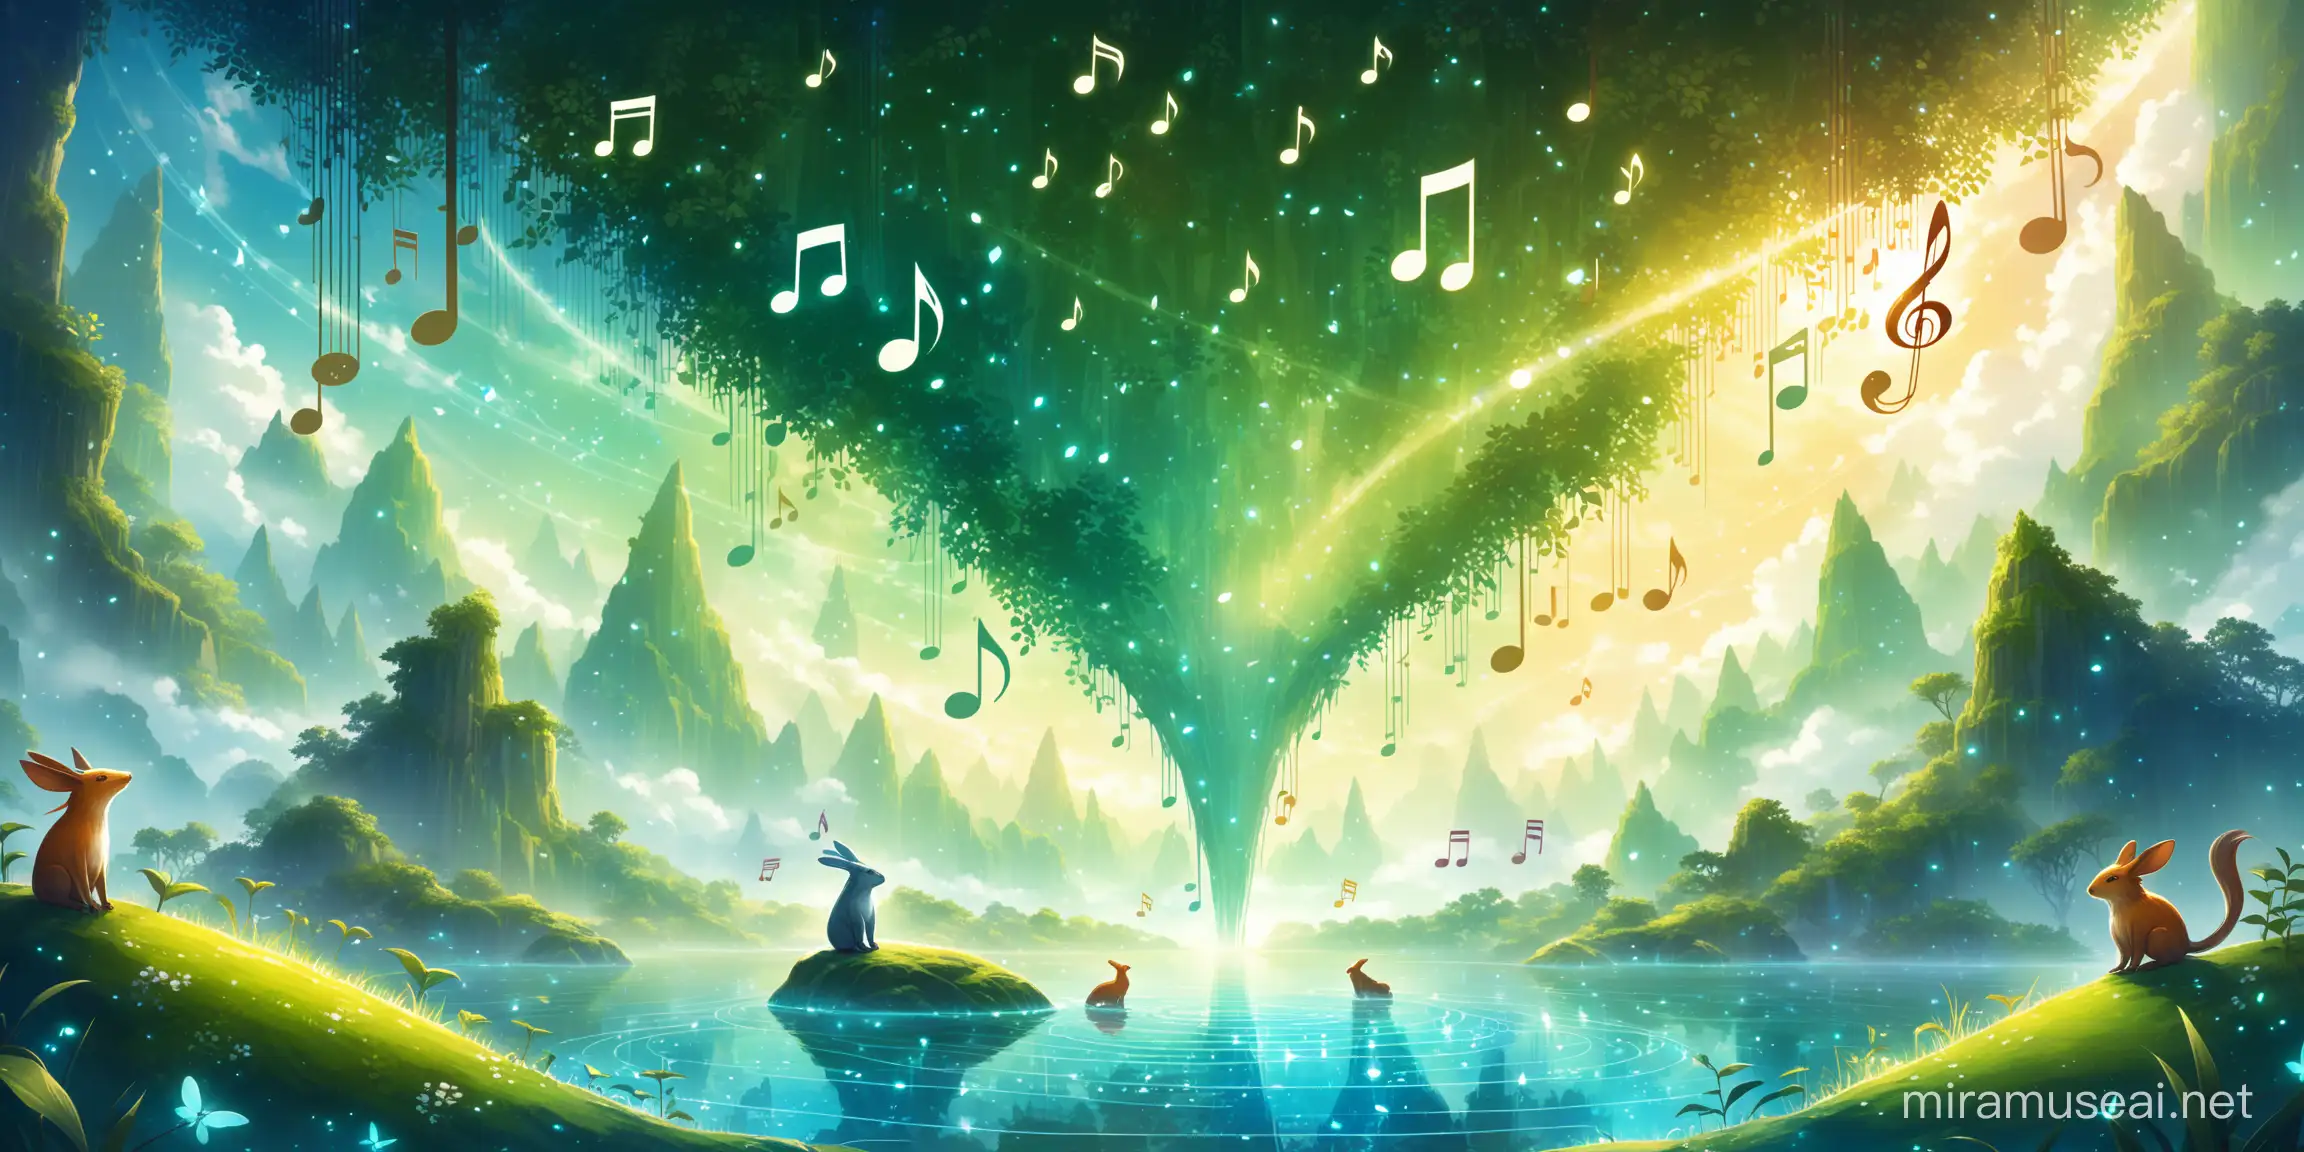 Fantasy Creatures in a Musical Wonderland